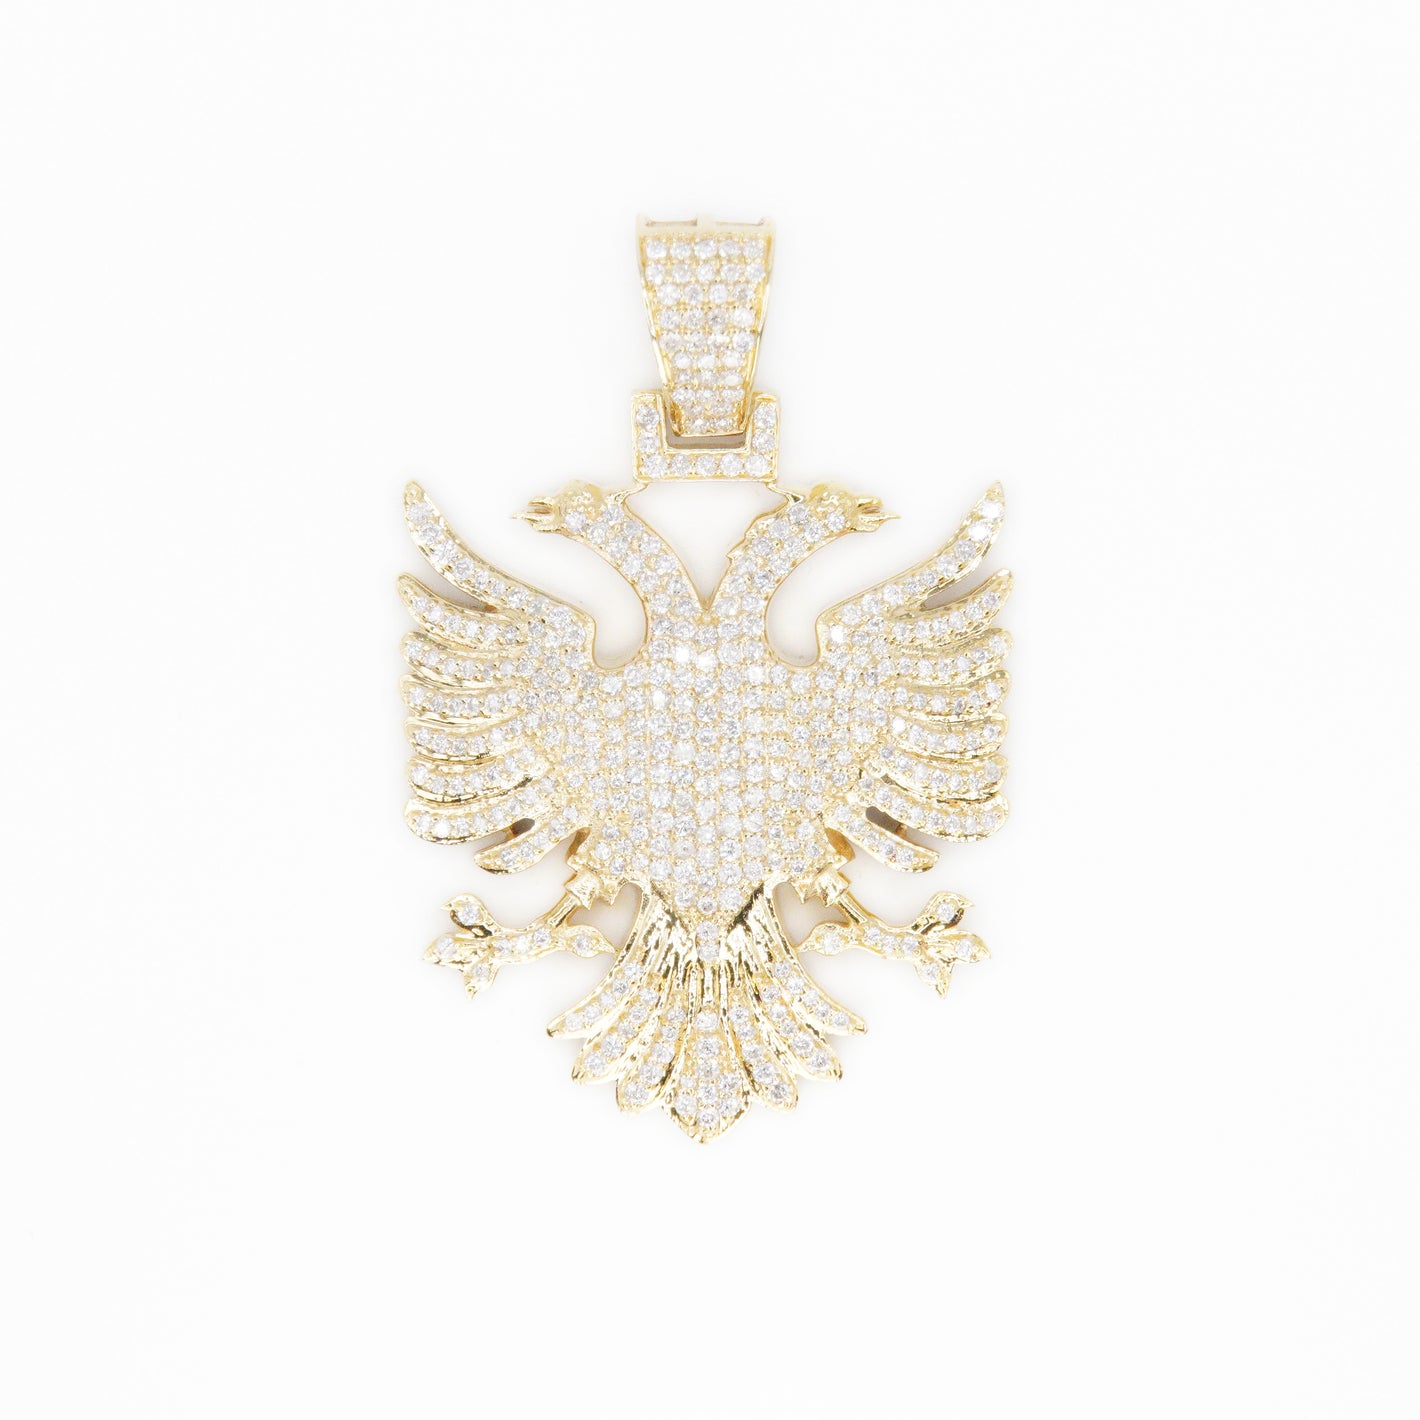 14k Solid Gold and Diamond Large Albanian Eagle Pendant